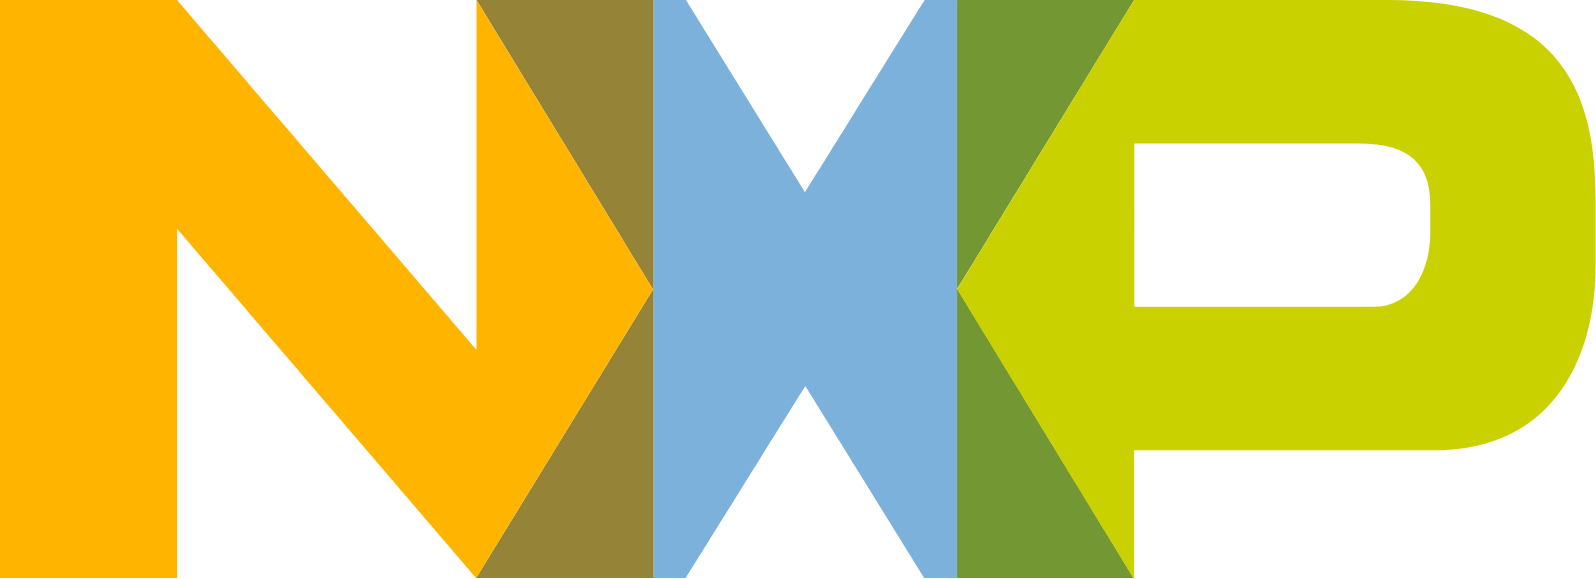 NXP Semiconductors logo (PNG transparent)